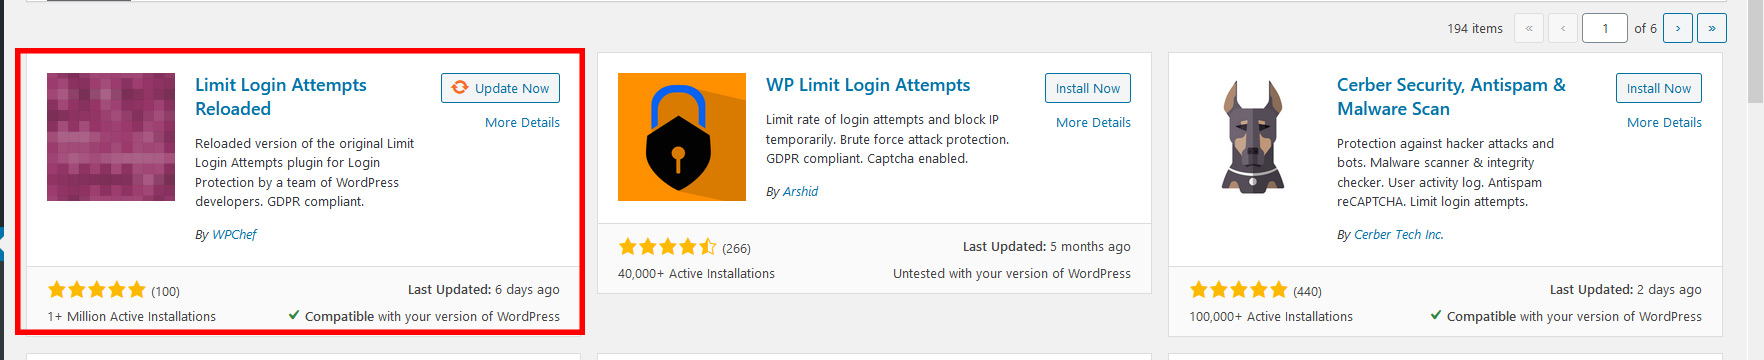 limit login attempts reloaded